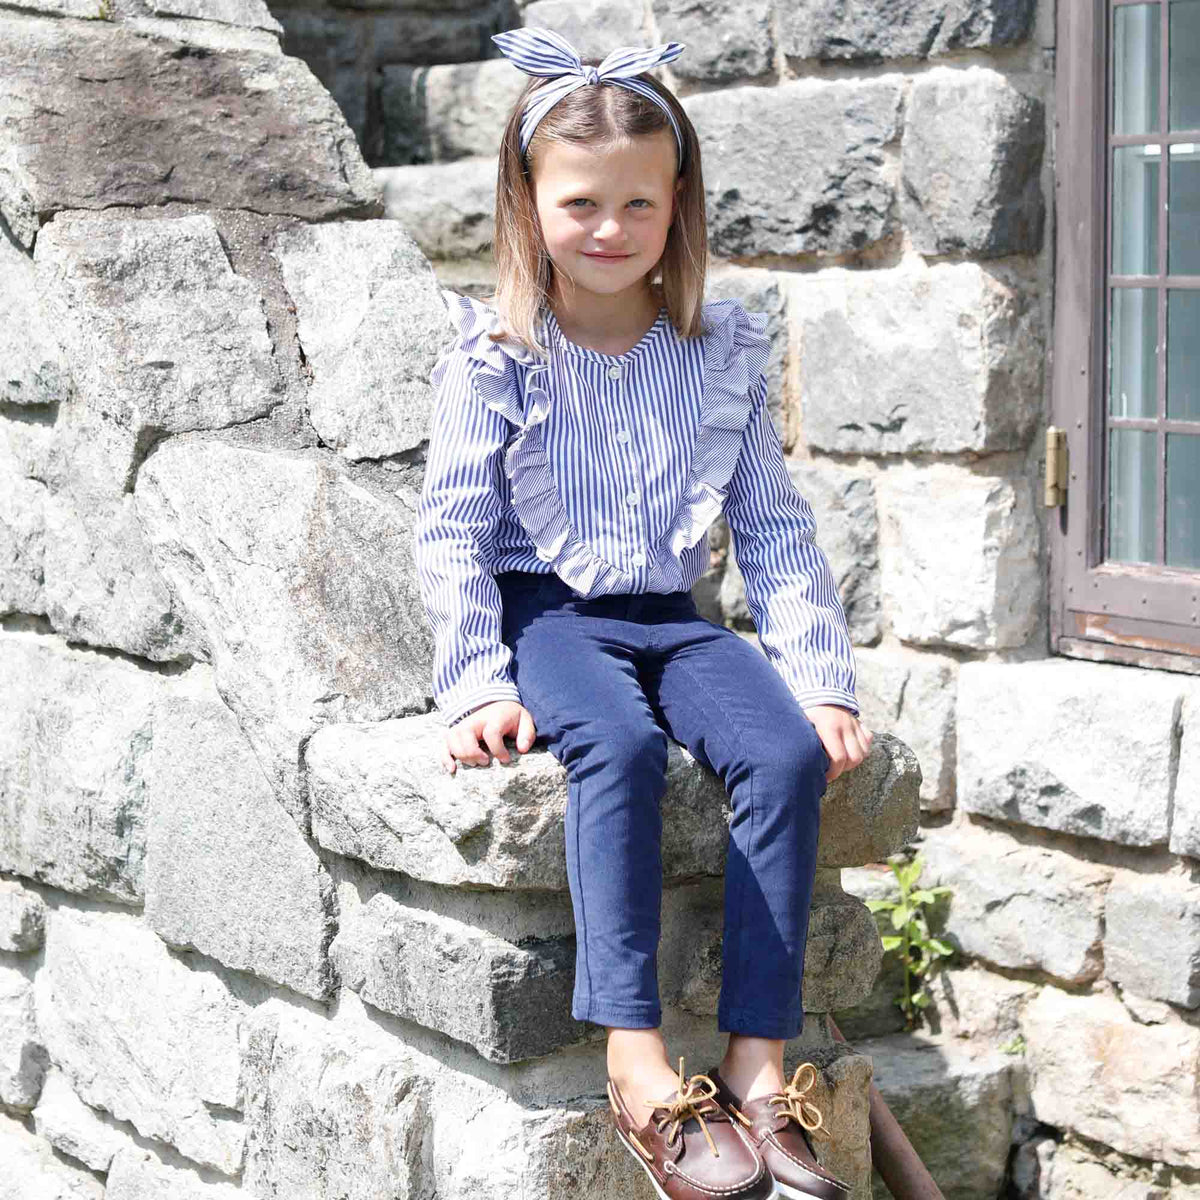 Classic and Preppy Jane 5 Pocket Pant Stretch 21W Corduroy, Medieval Blue-Bottoms-CPC - Classic Prep Childrenswear